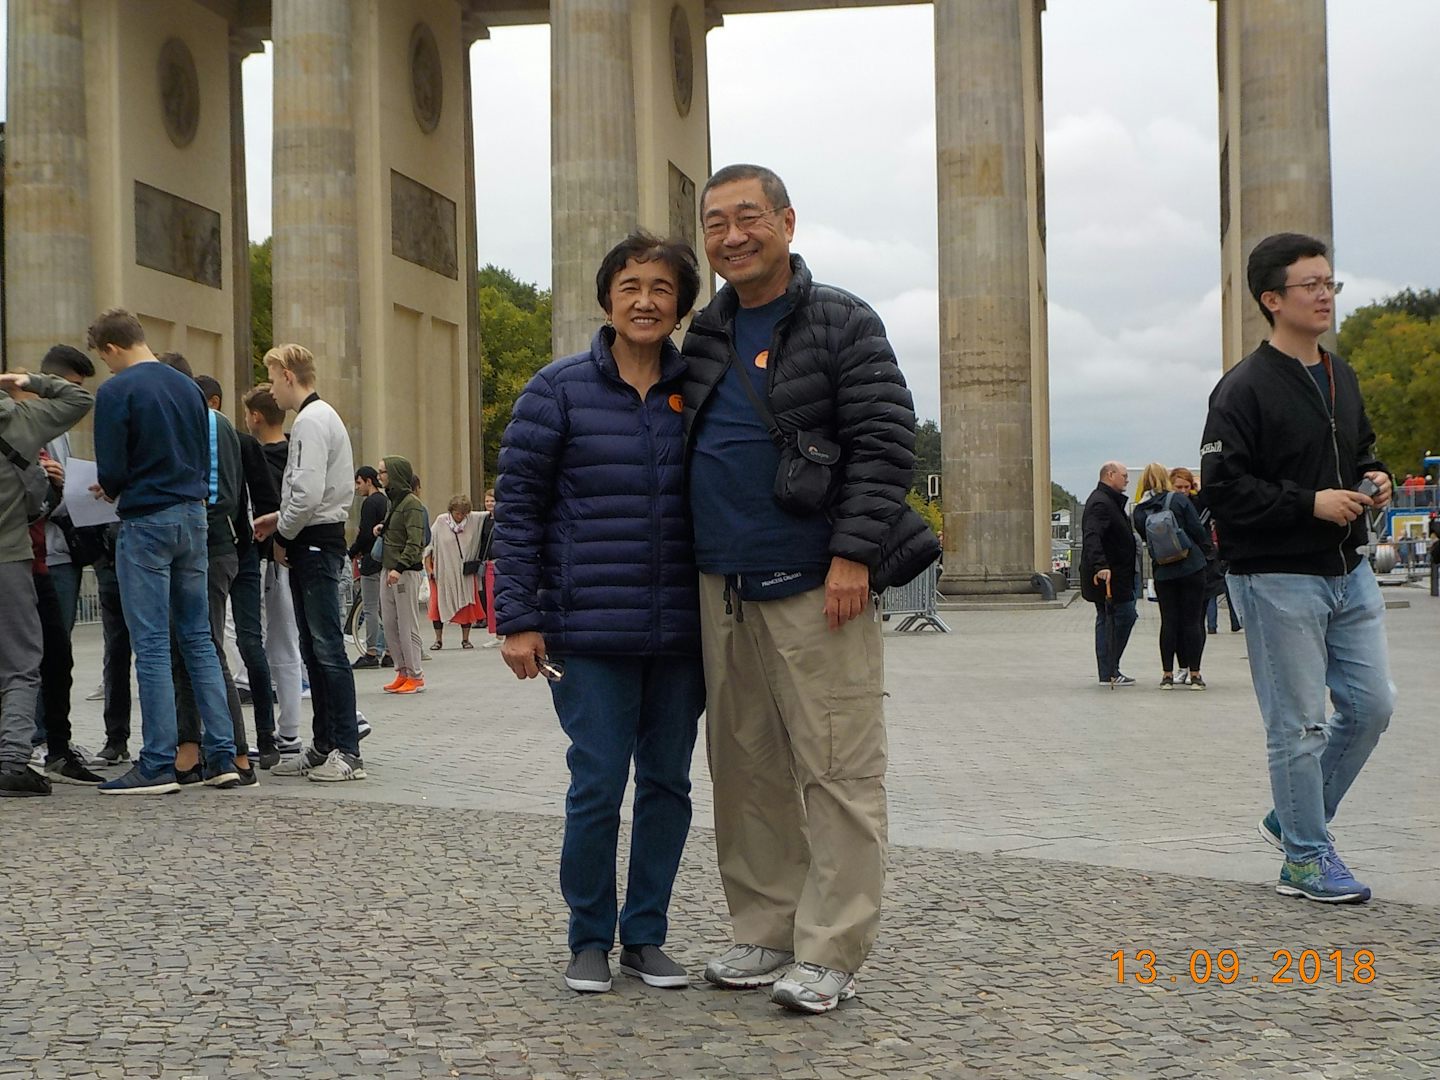 In front of Brandenburg Gate, Berlin.